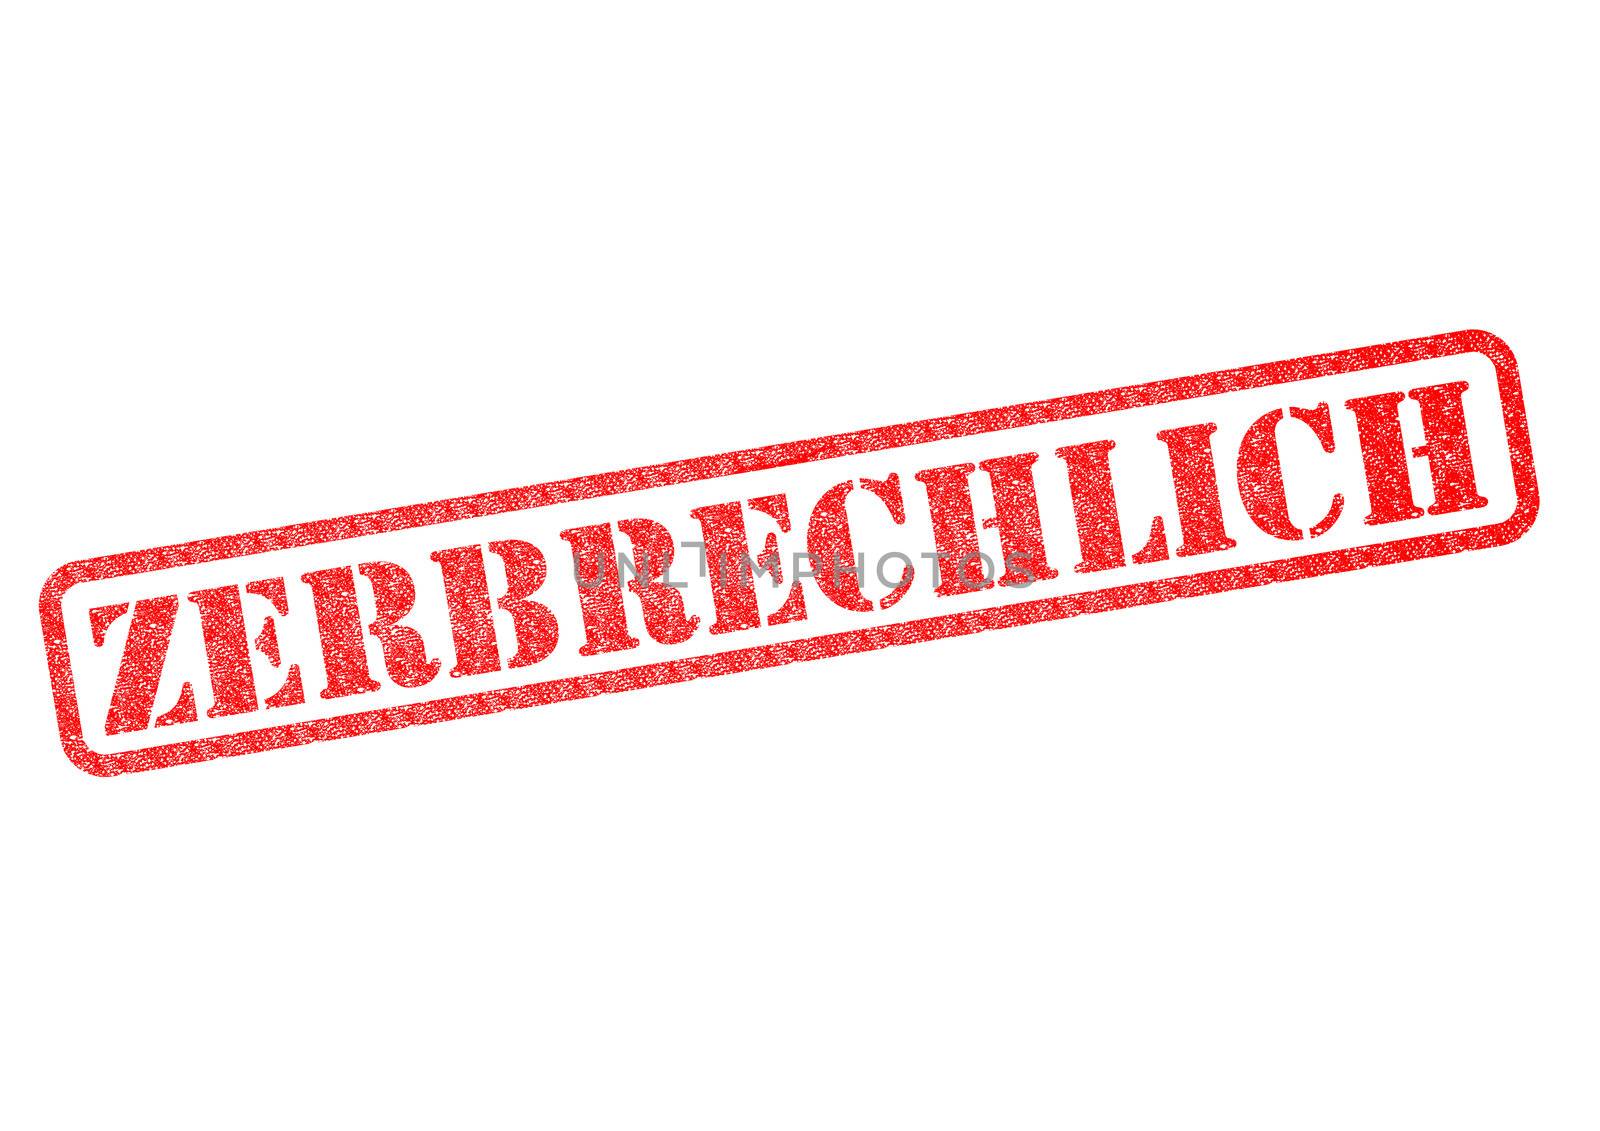 Zerbrechlich (Fragile) Stamp over a white background.